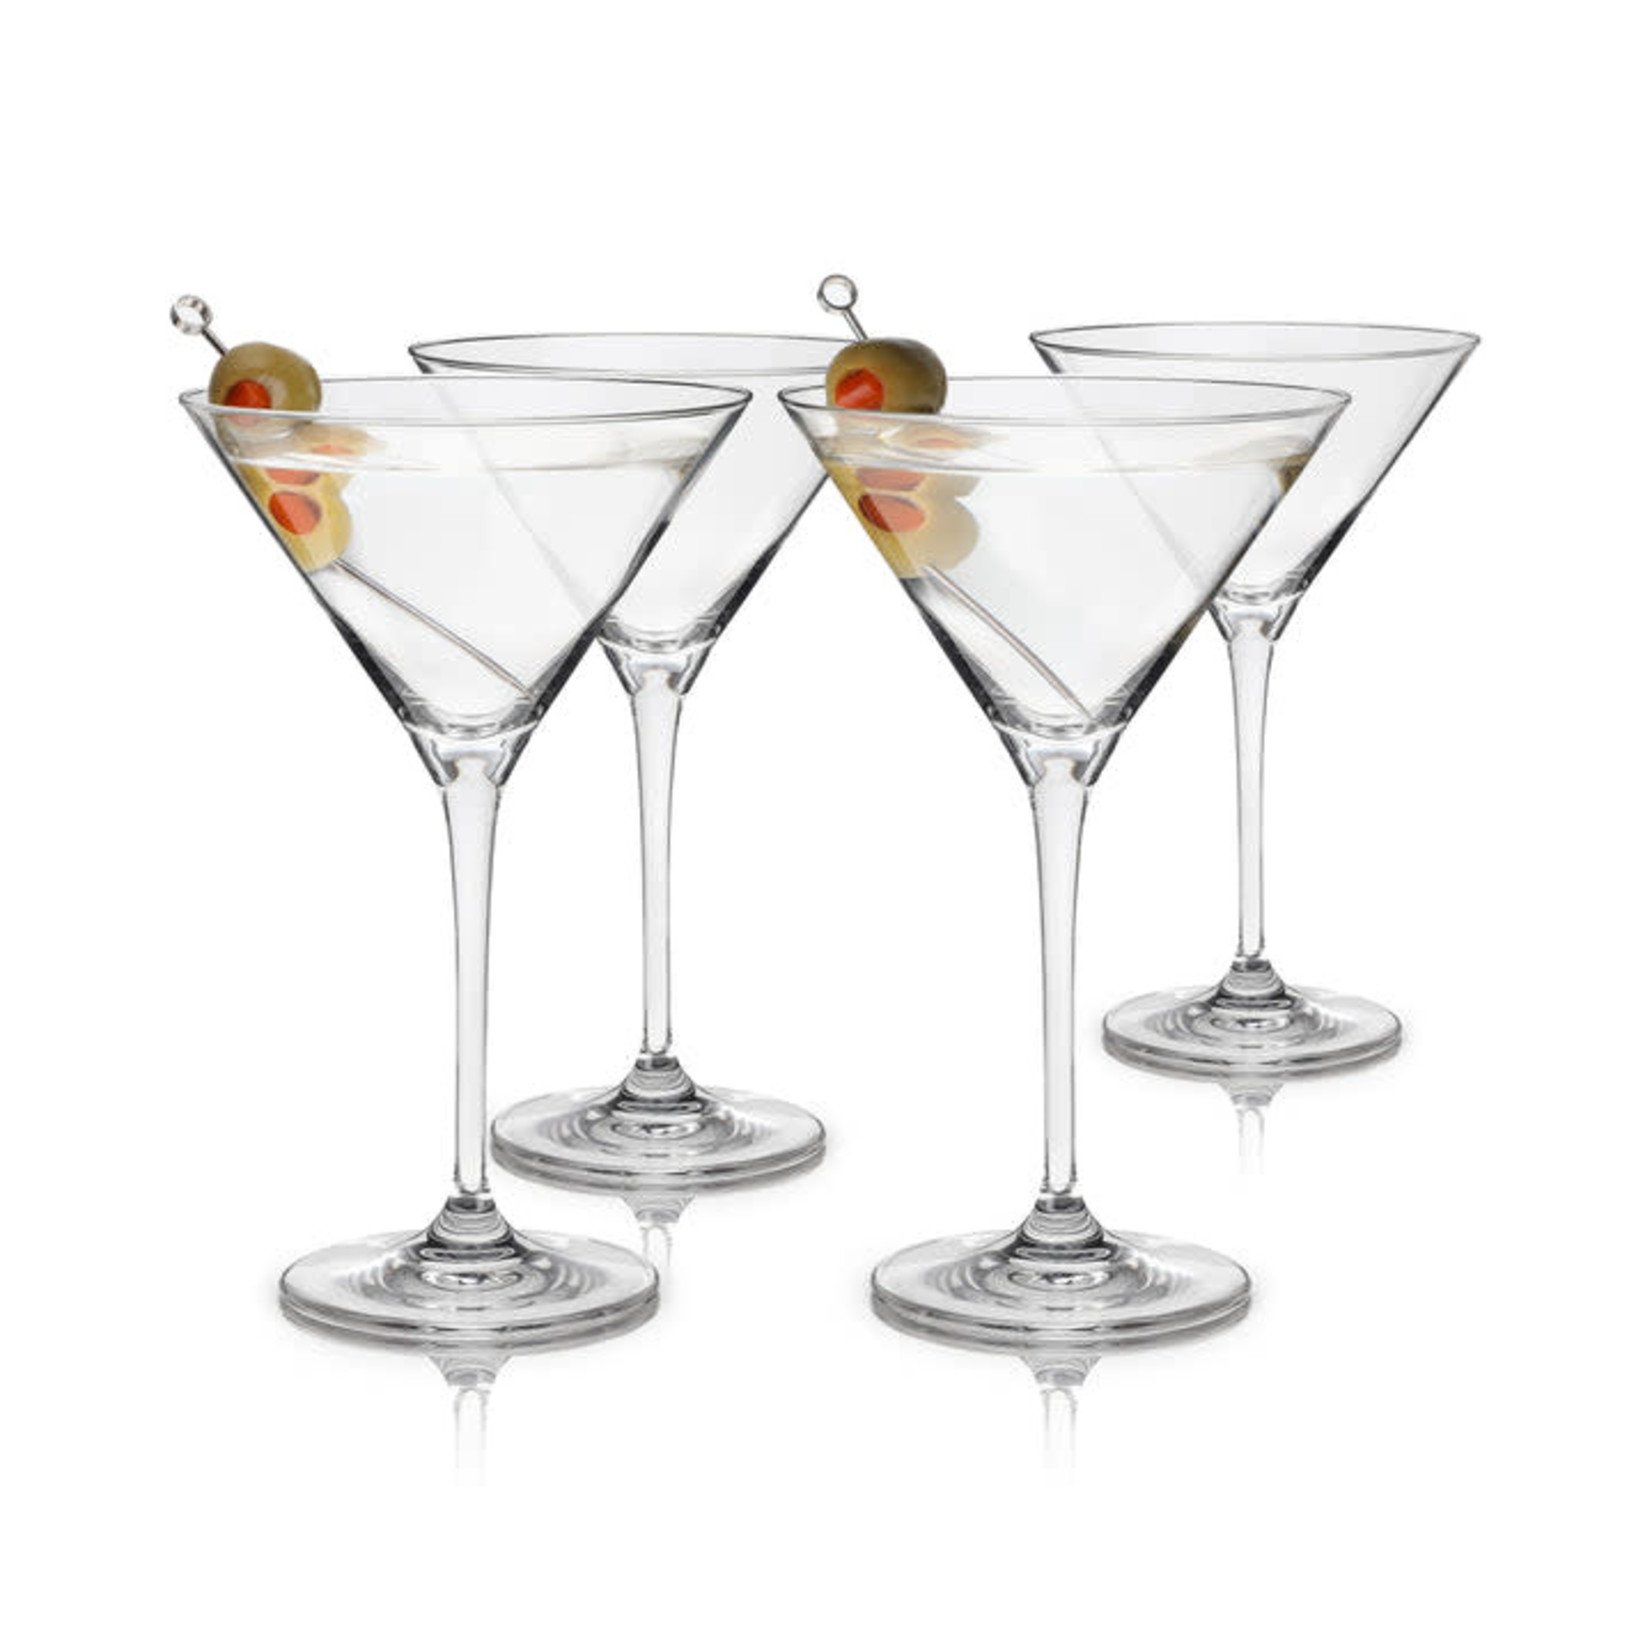 European Crystal Martini Glasses by Viski - Set of 4